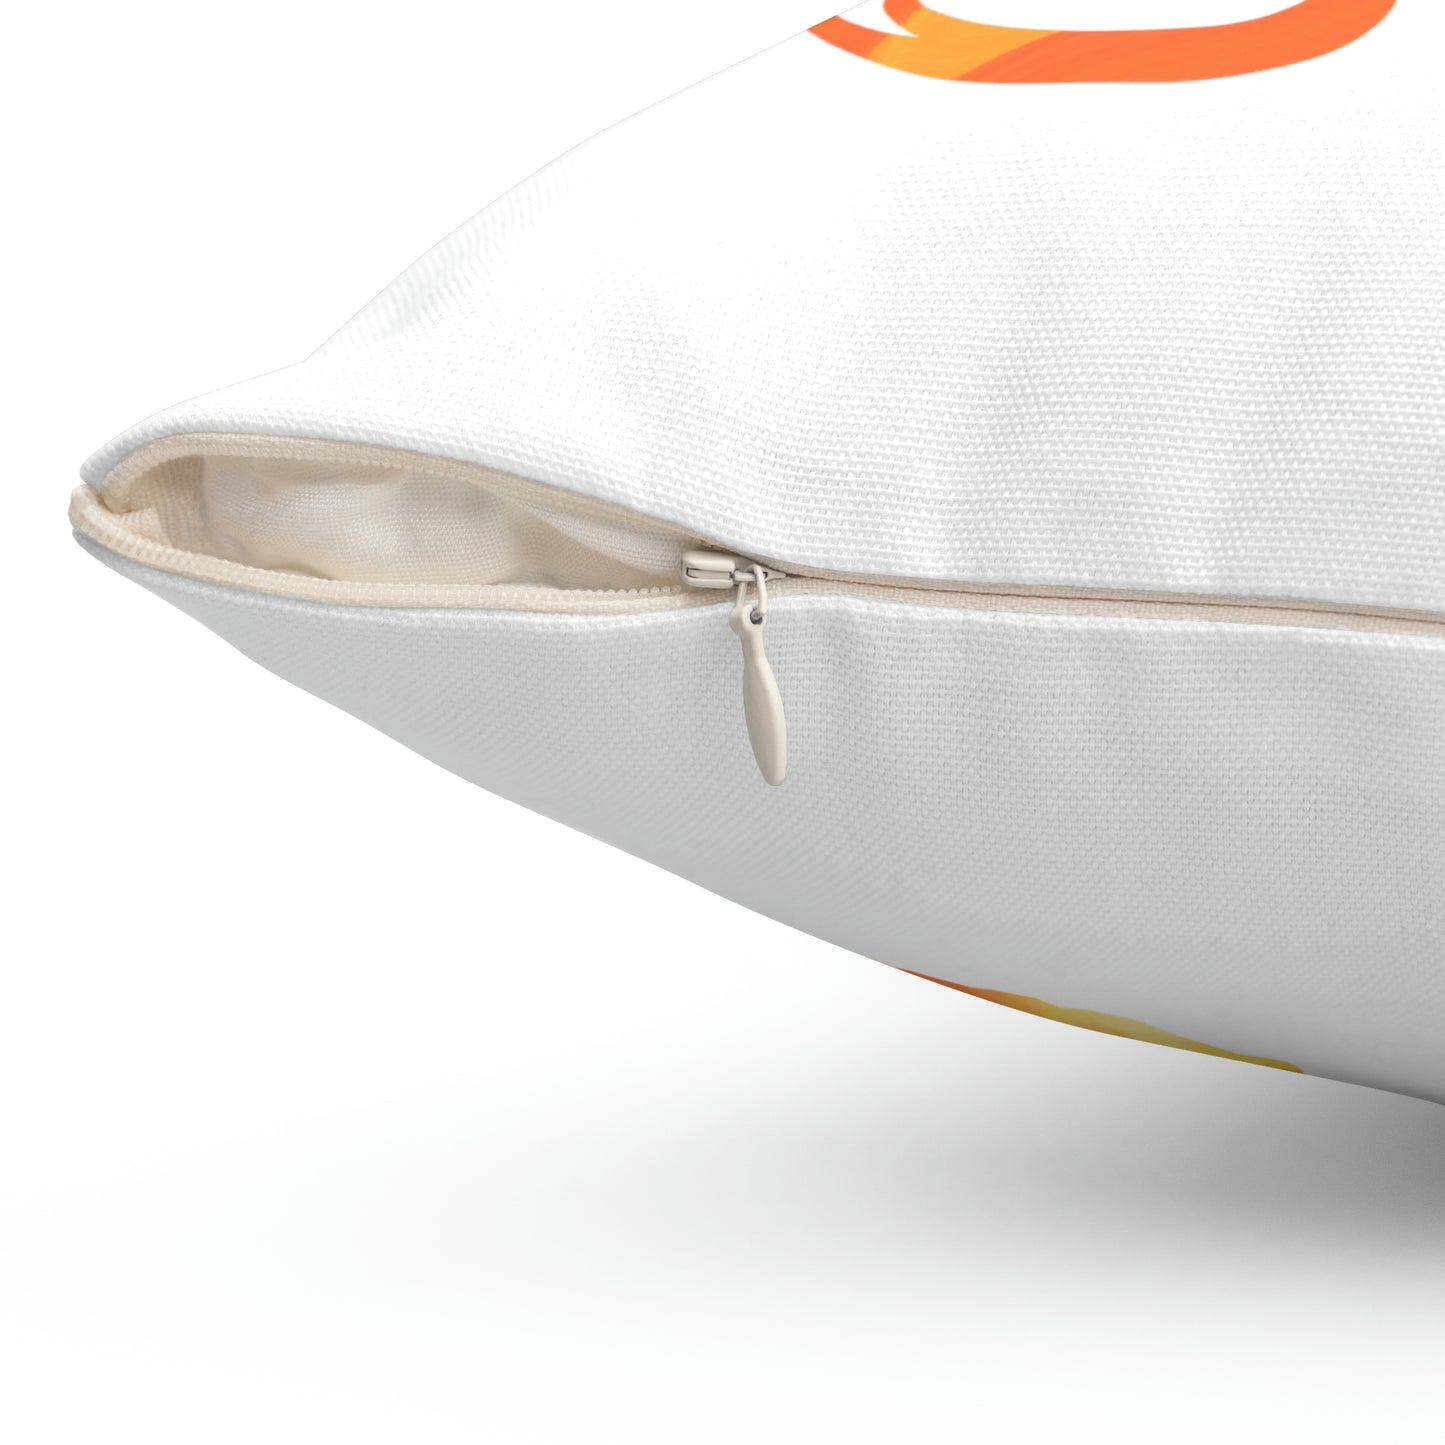 Spun Polyester Square Pillow Case ”Storm Trooper 3 on White”